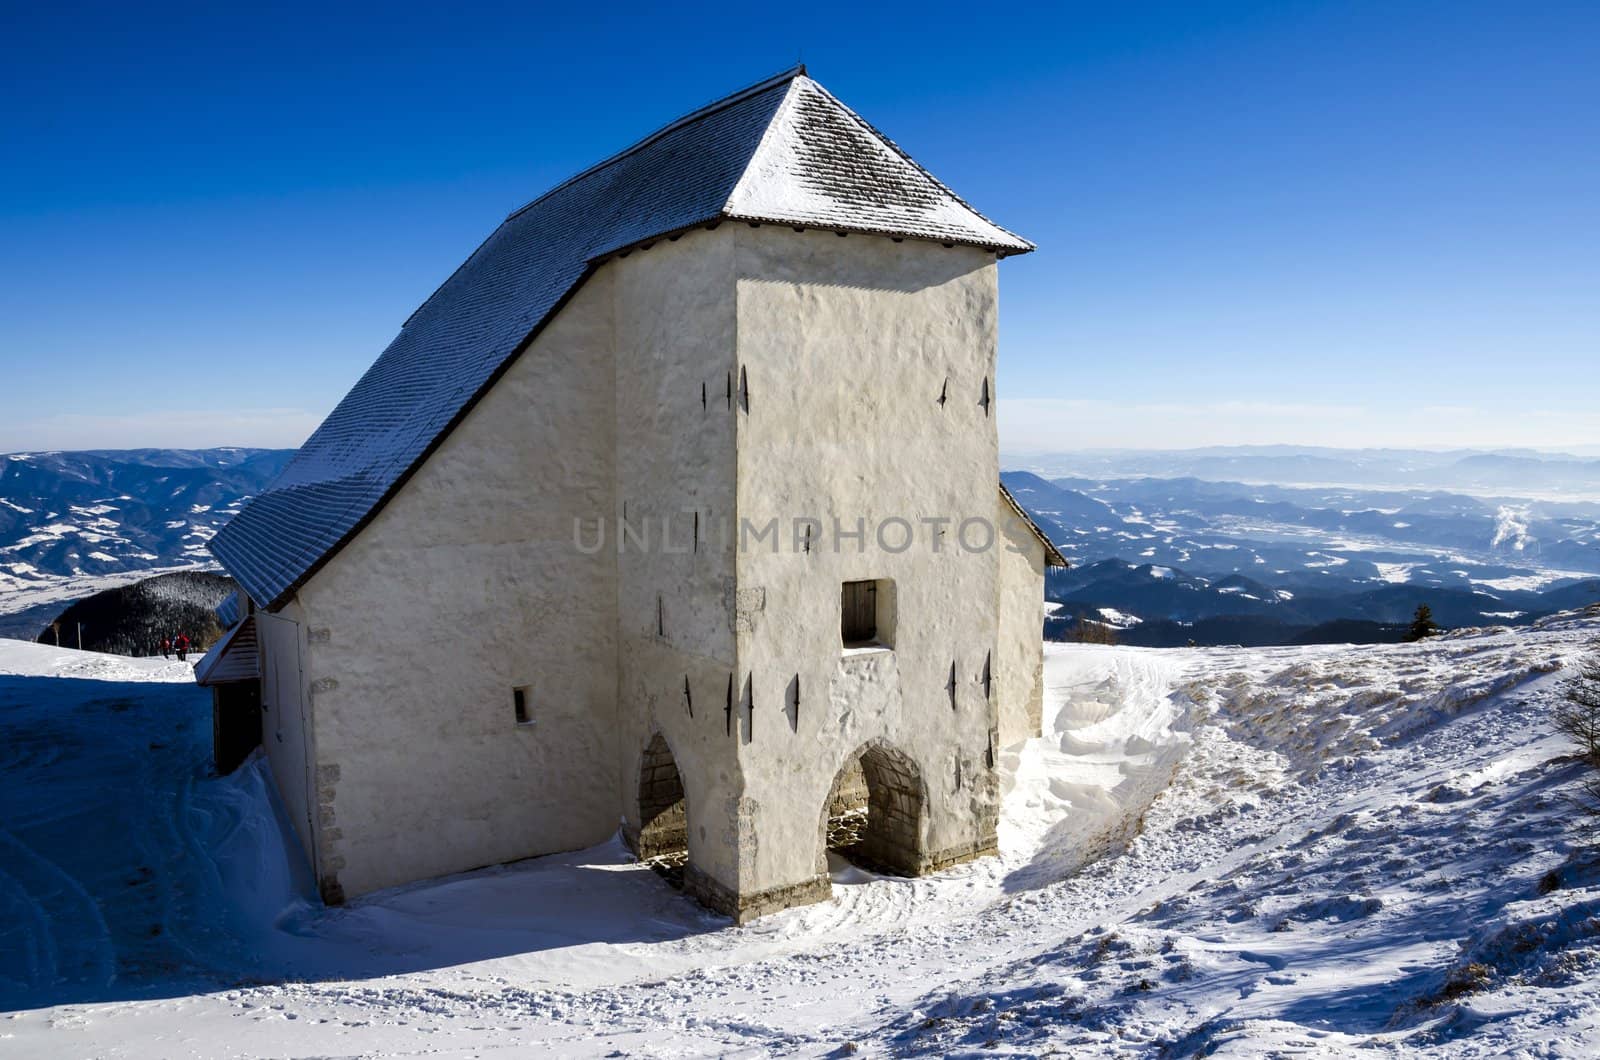 Church of St. Ursus on a Plesivec mountain, Slovenia.